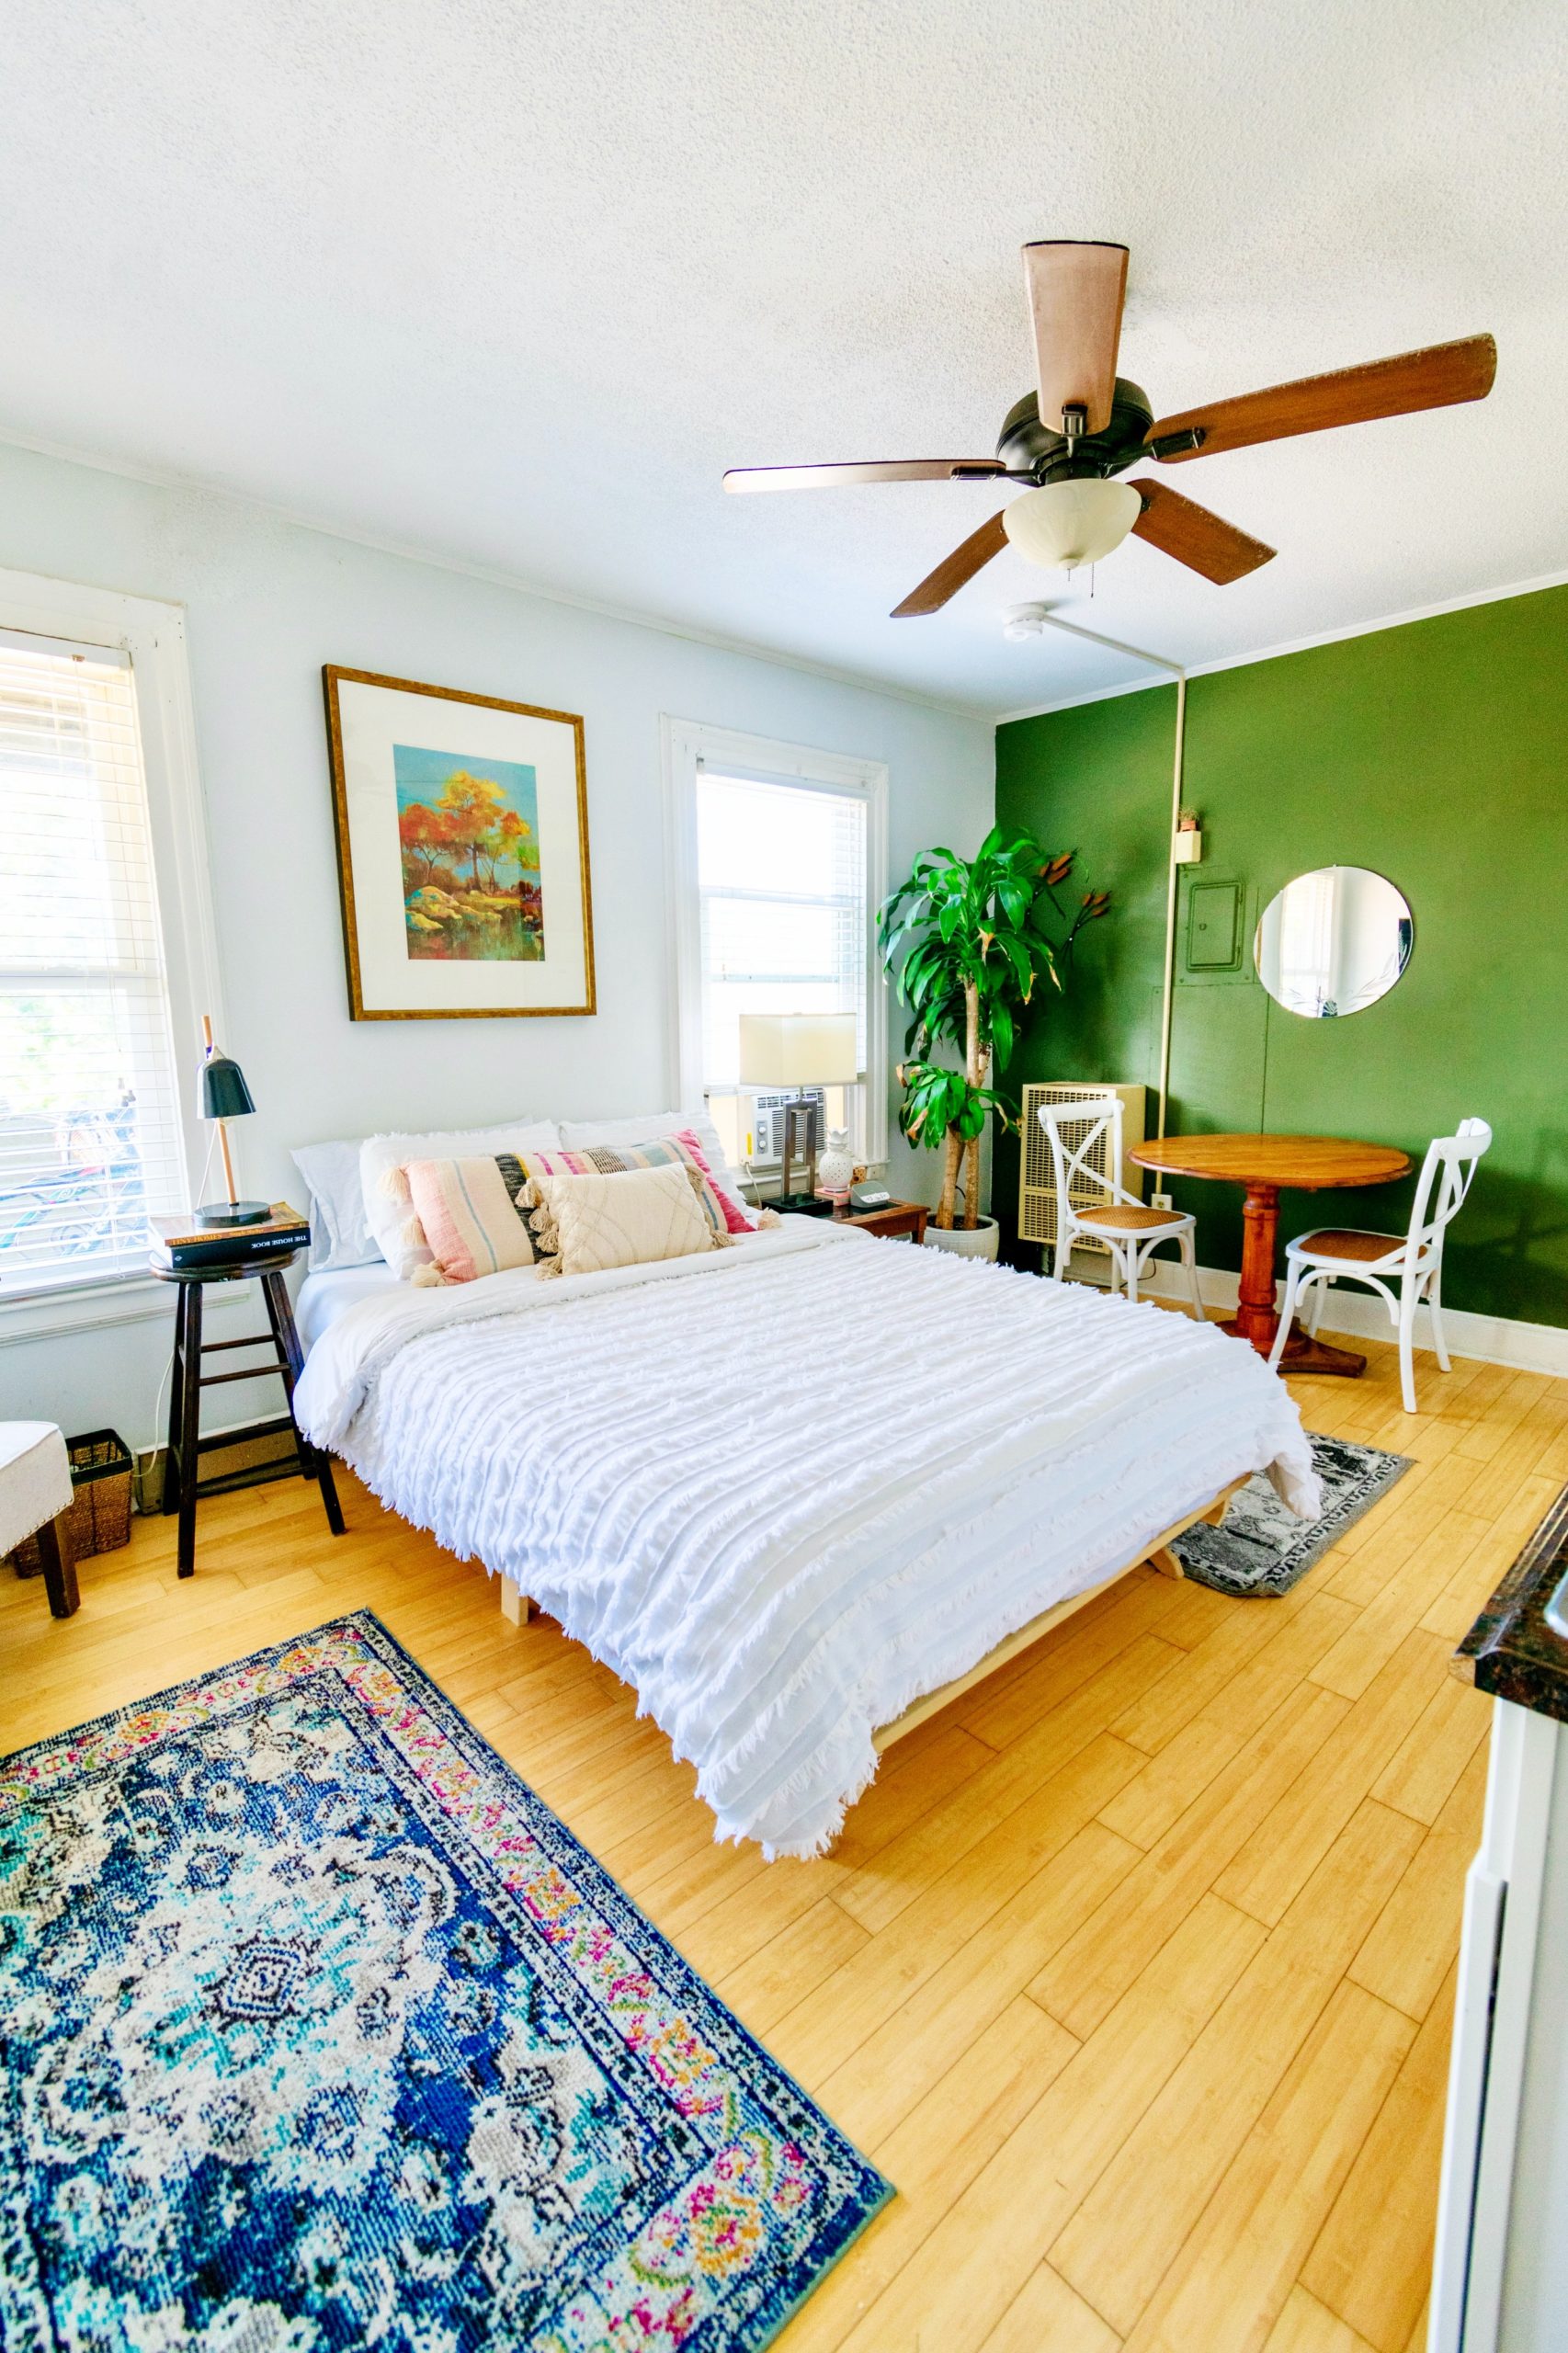 <img src="eclectic.jpg" alt="eclectic green bold bedroom decor"/> 